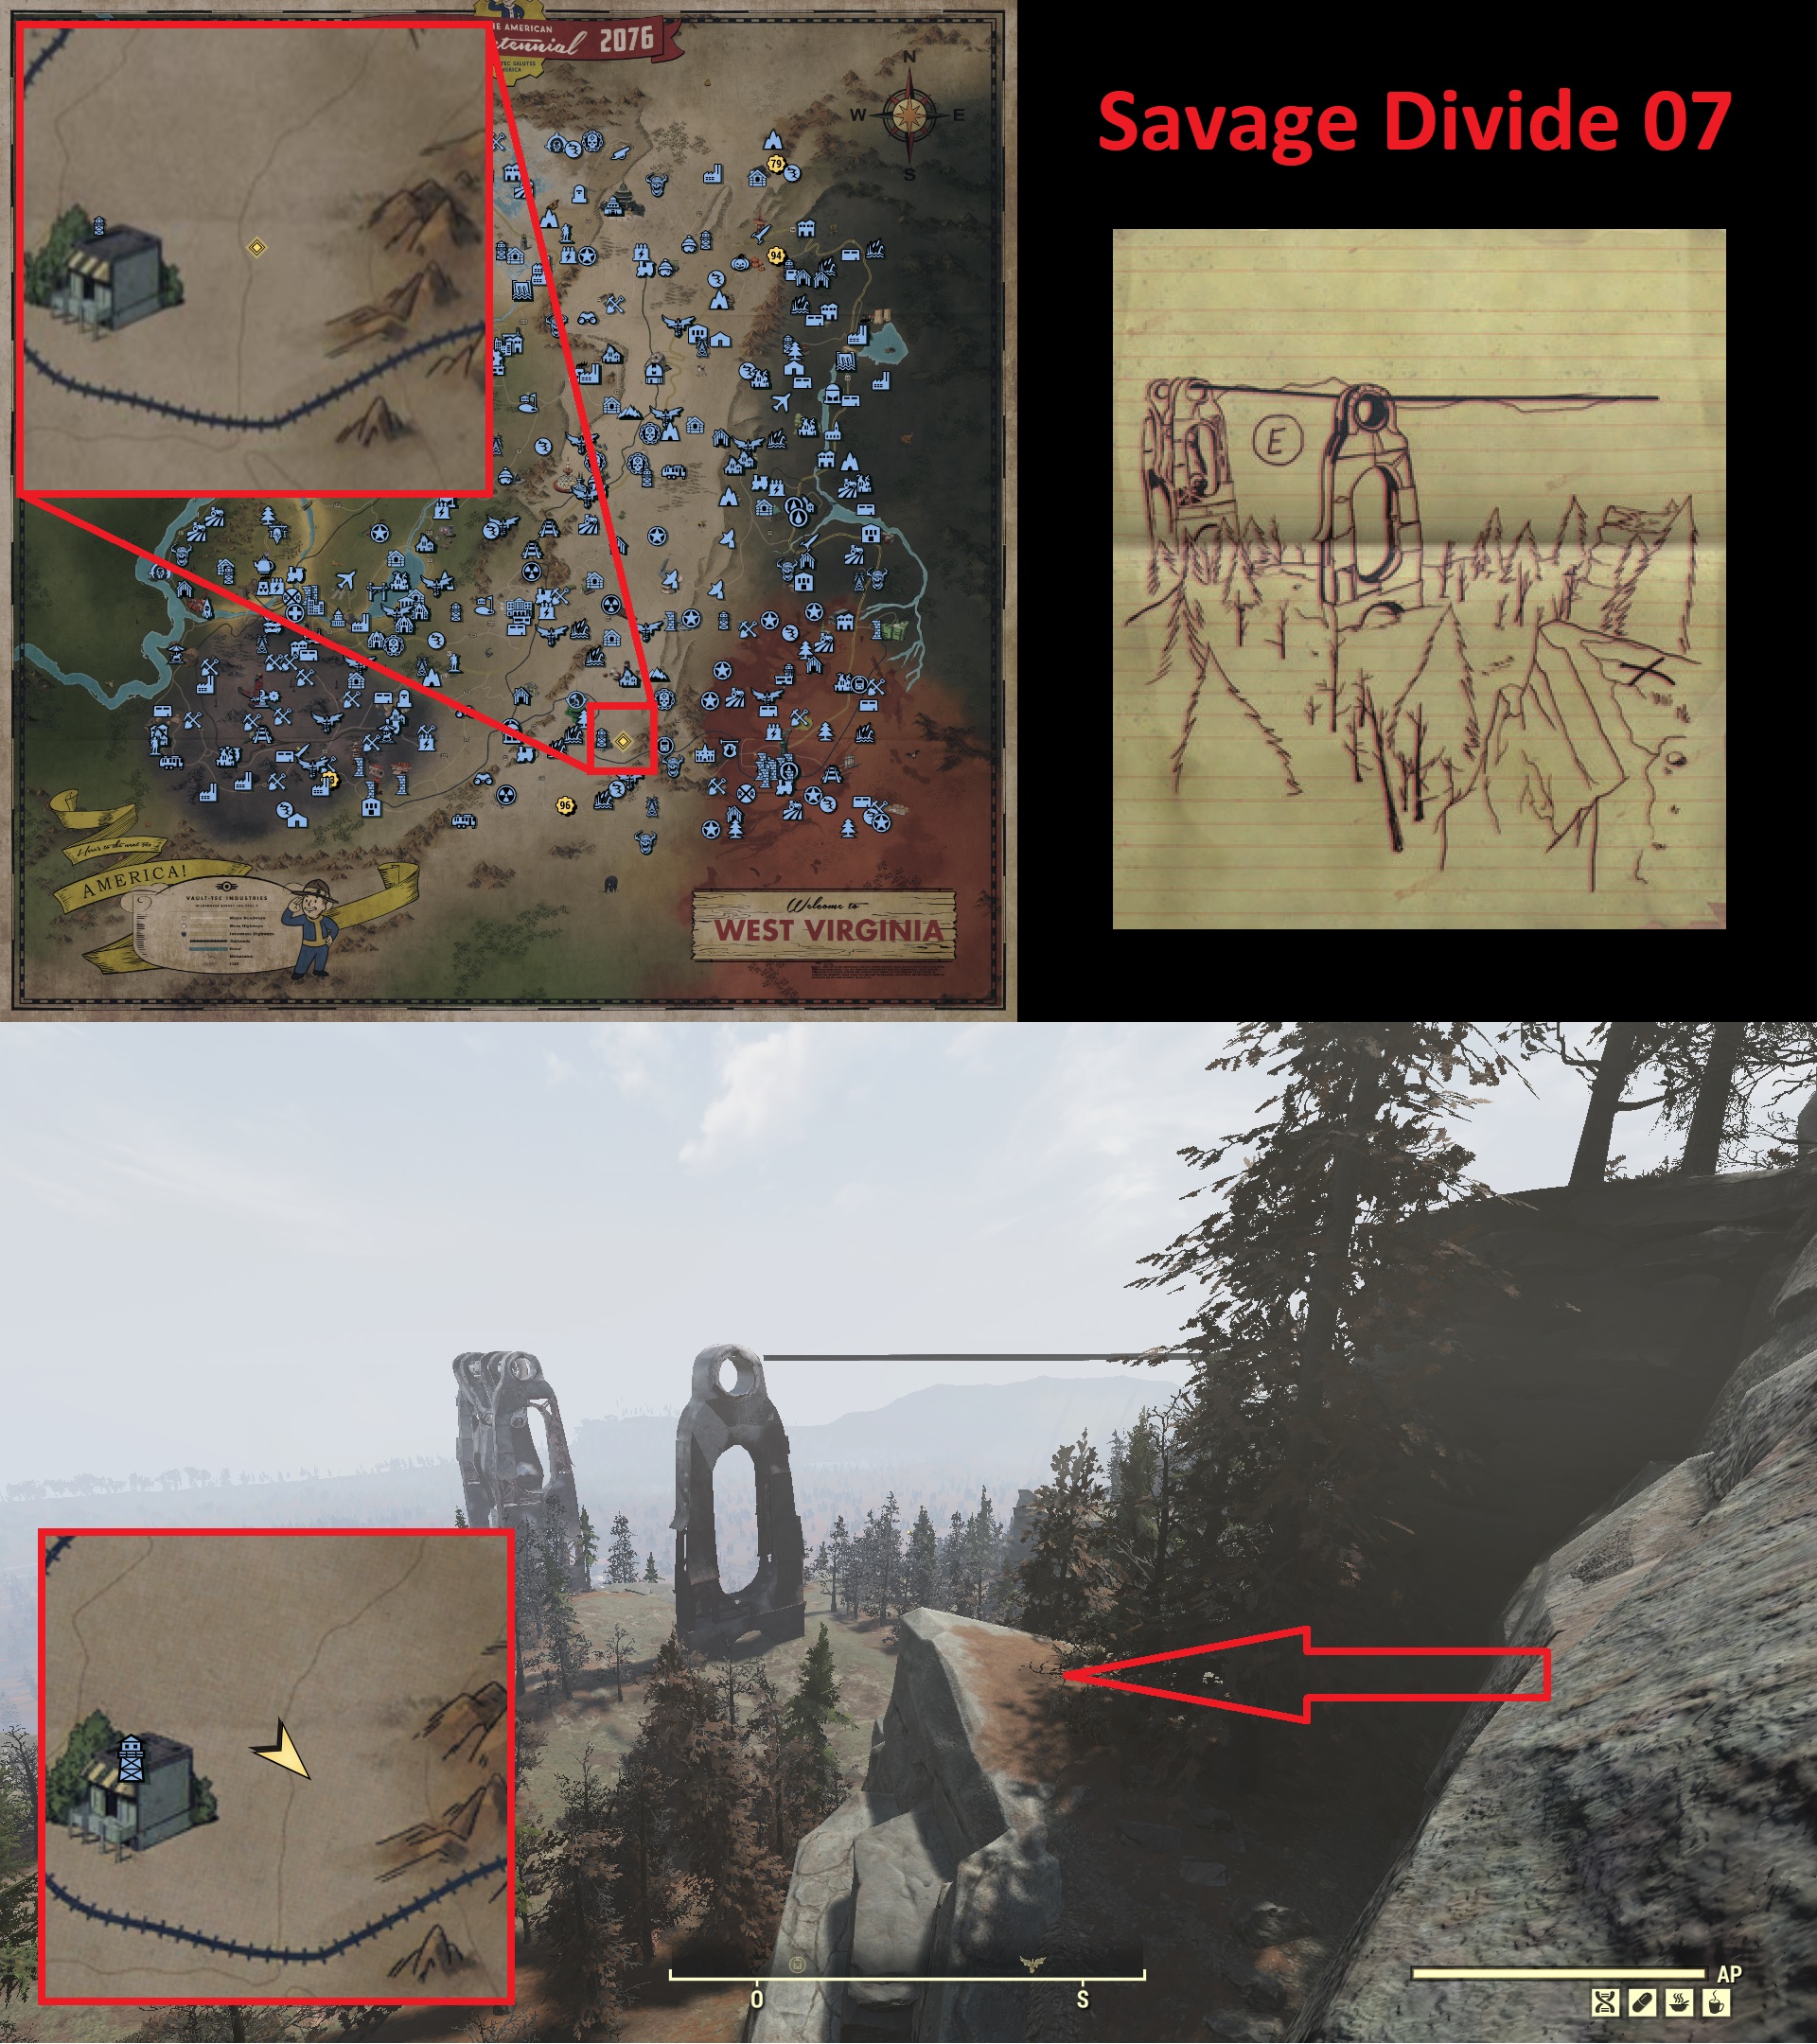 Fallout 76 Treasure Map Locations - Savage Divide 07 - E7B330F